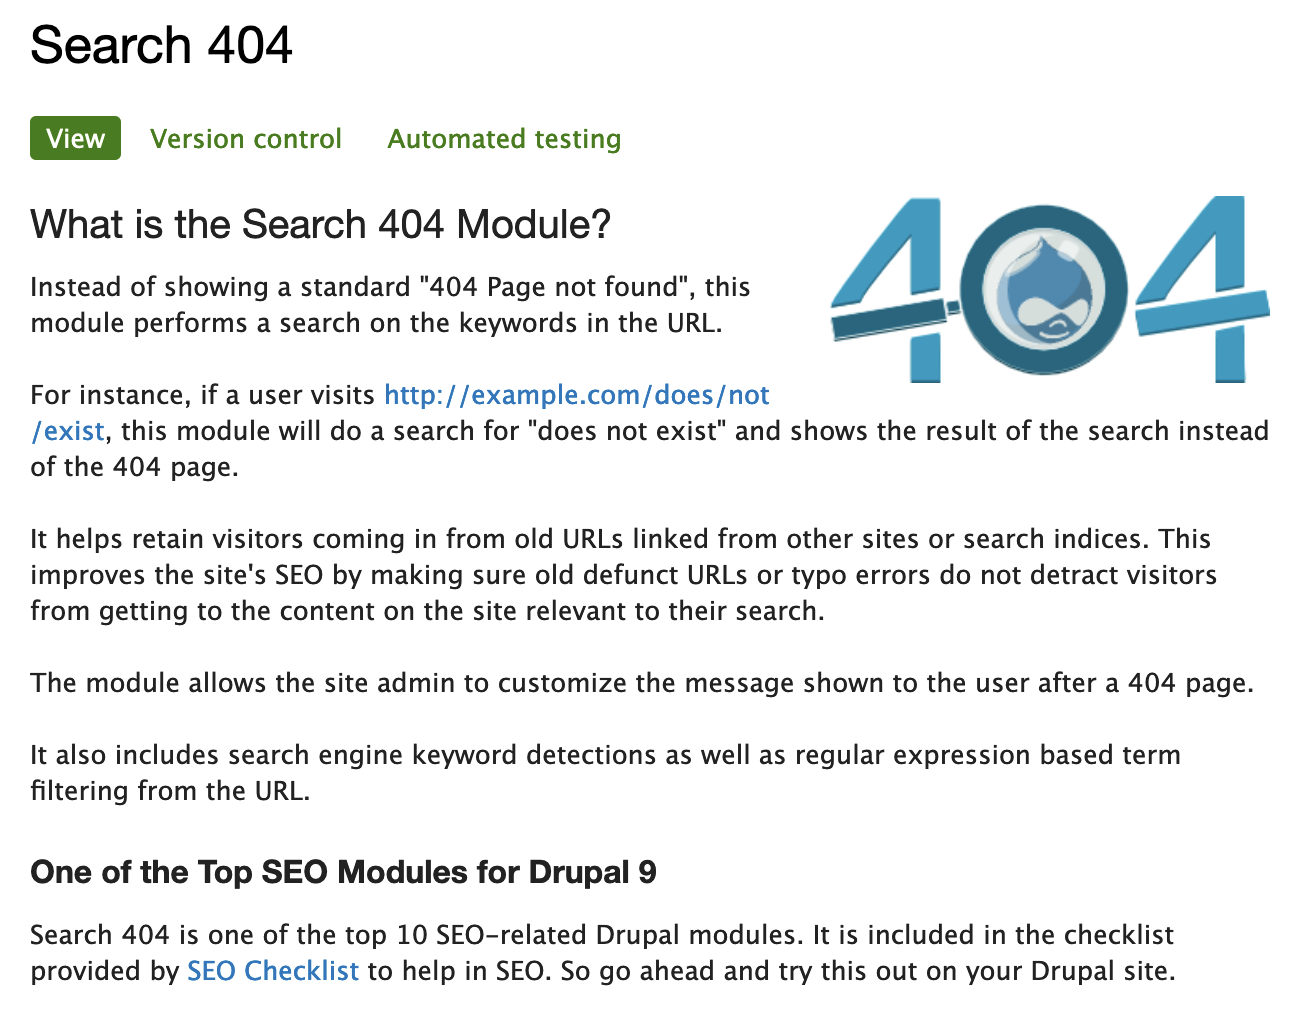 Drupal SEO modules: Search 404 contributed Drupal module